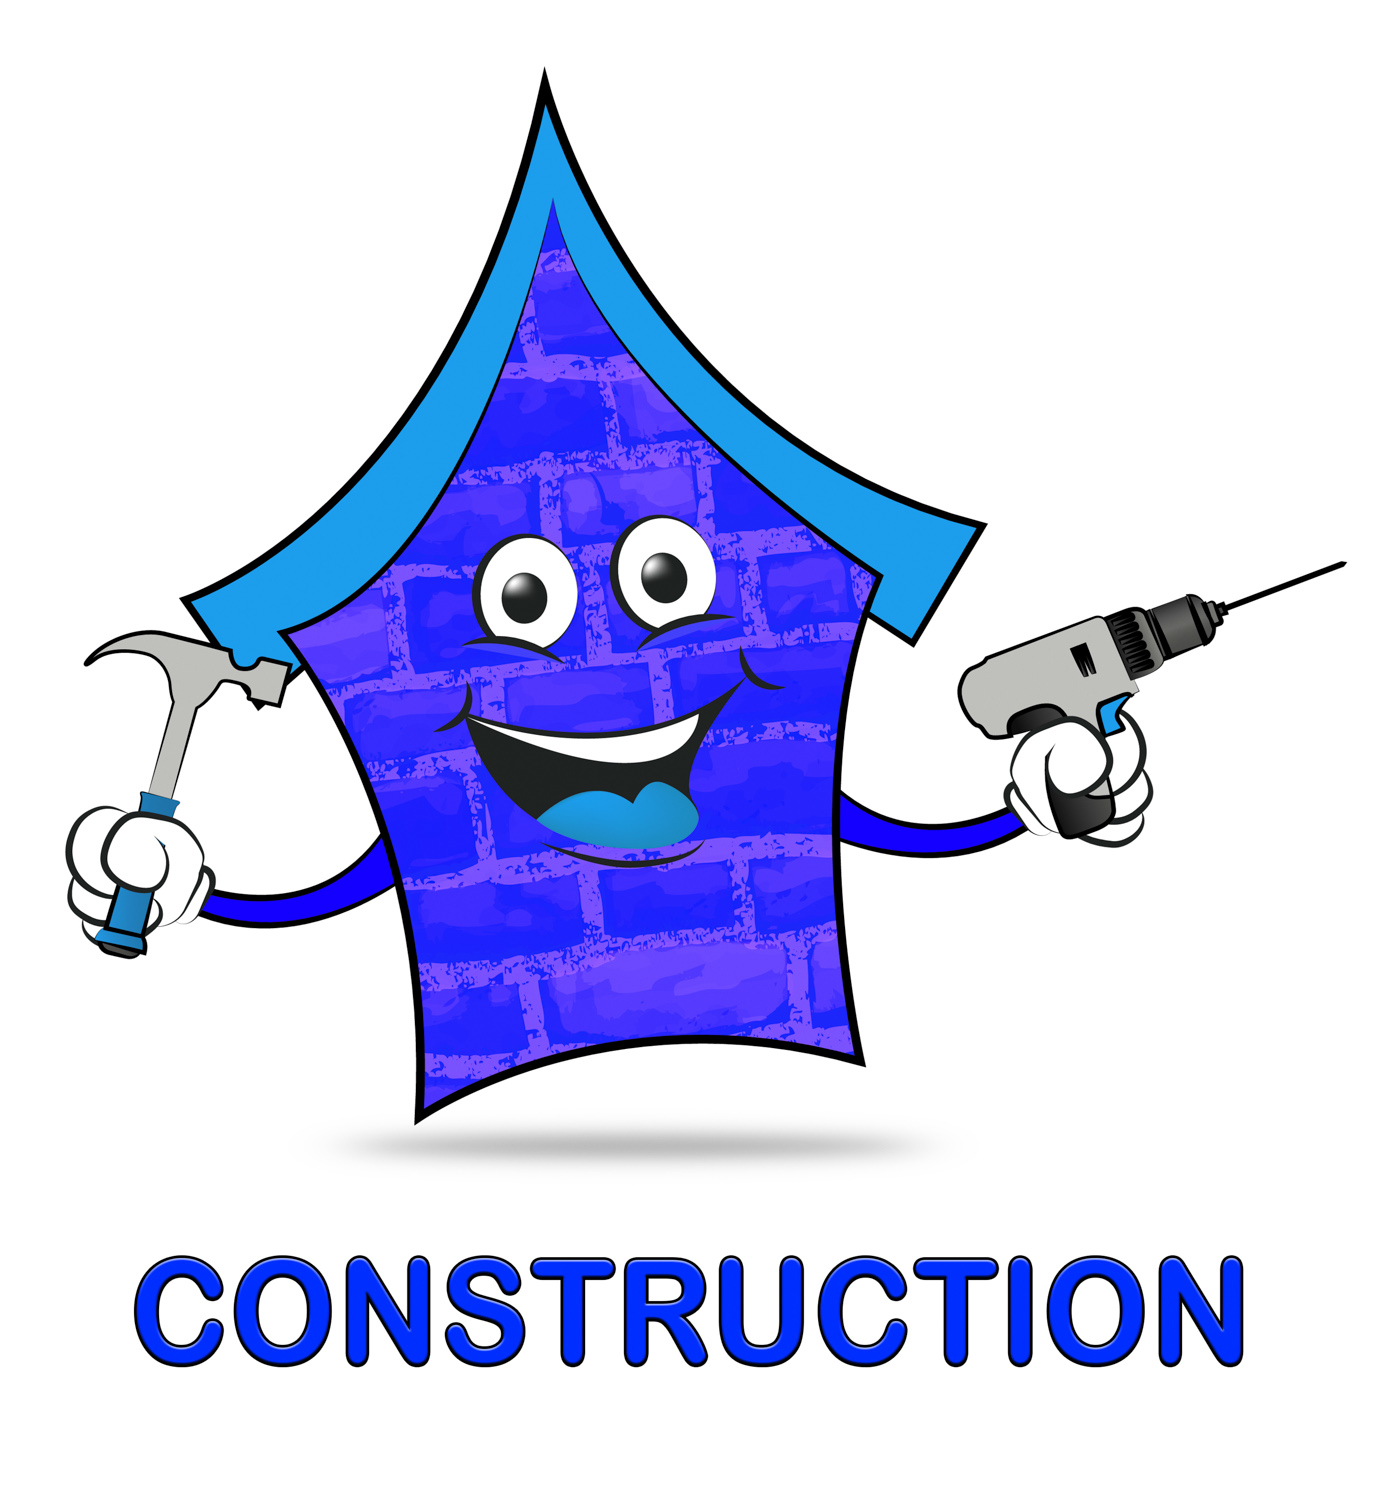 House construction means real estate building 3d illustration photo